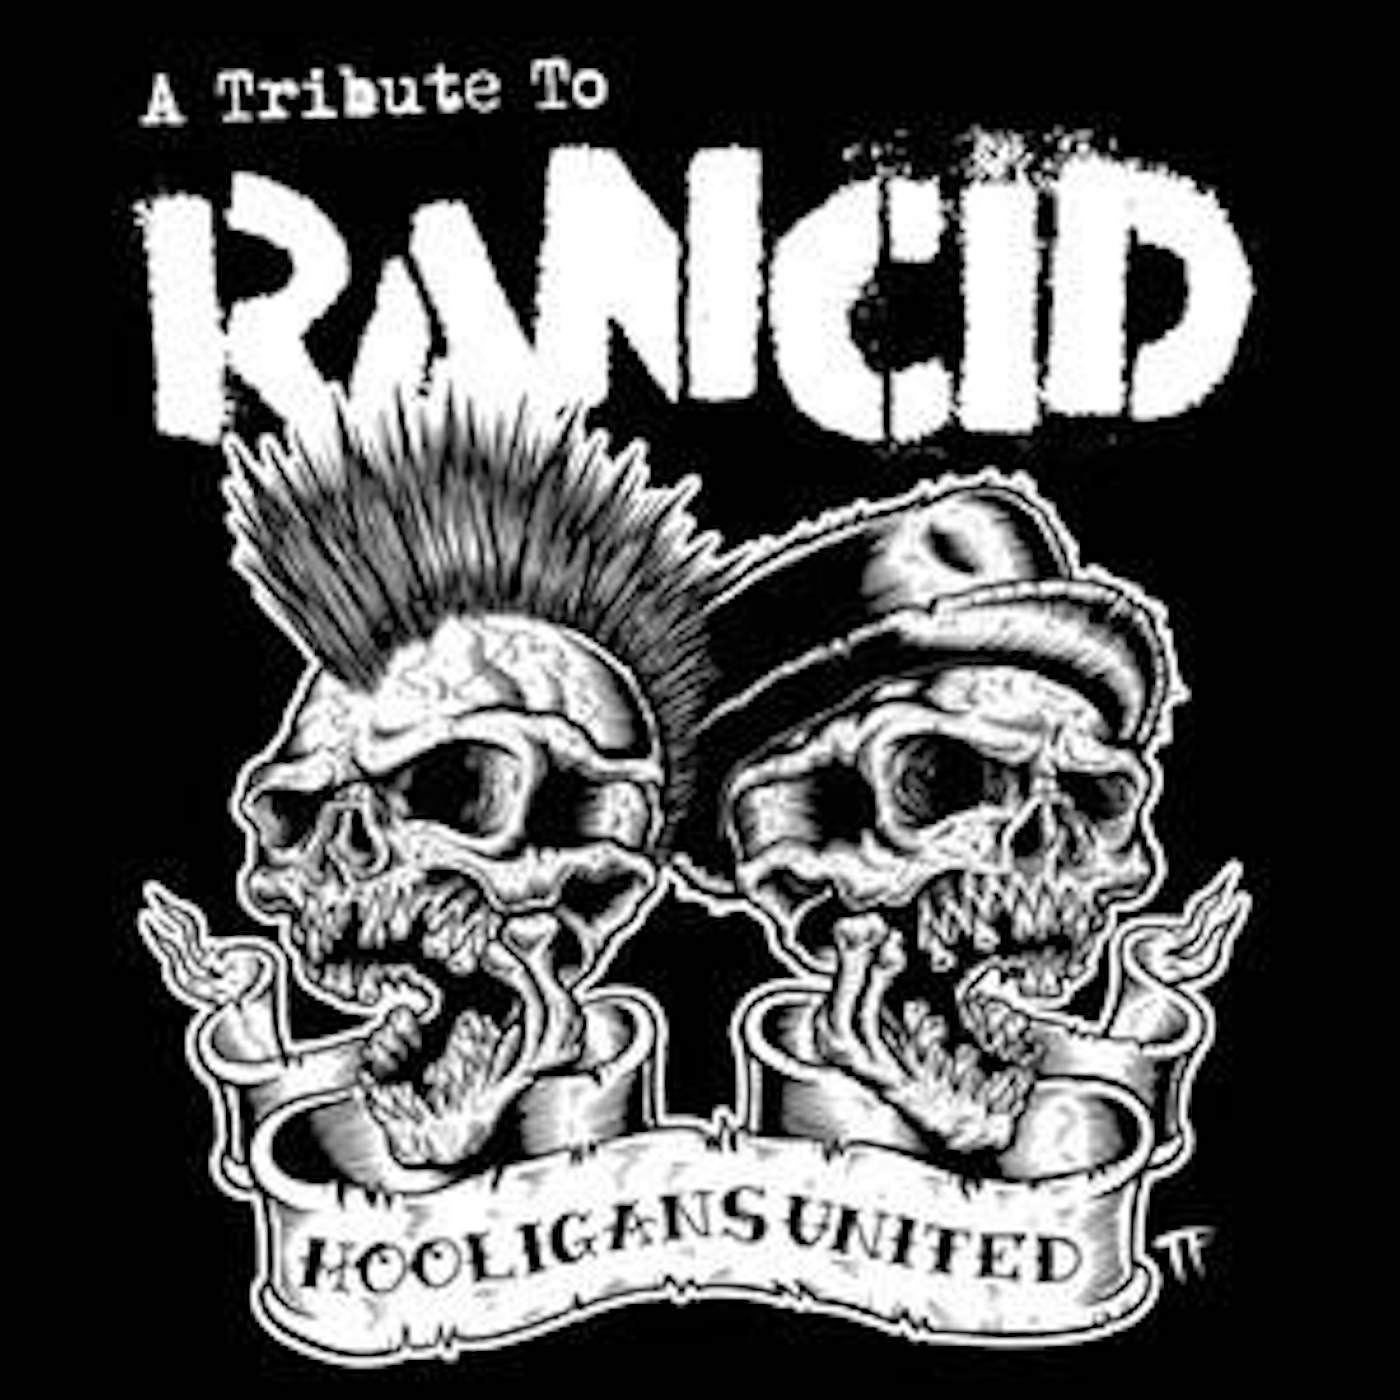 Road Dog Merch Hooligans United A Tribute To Rancid Vinyl (Orange) 3x12" Record